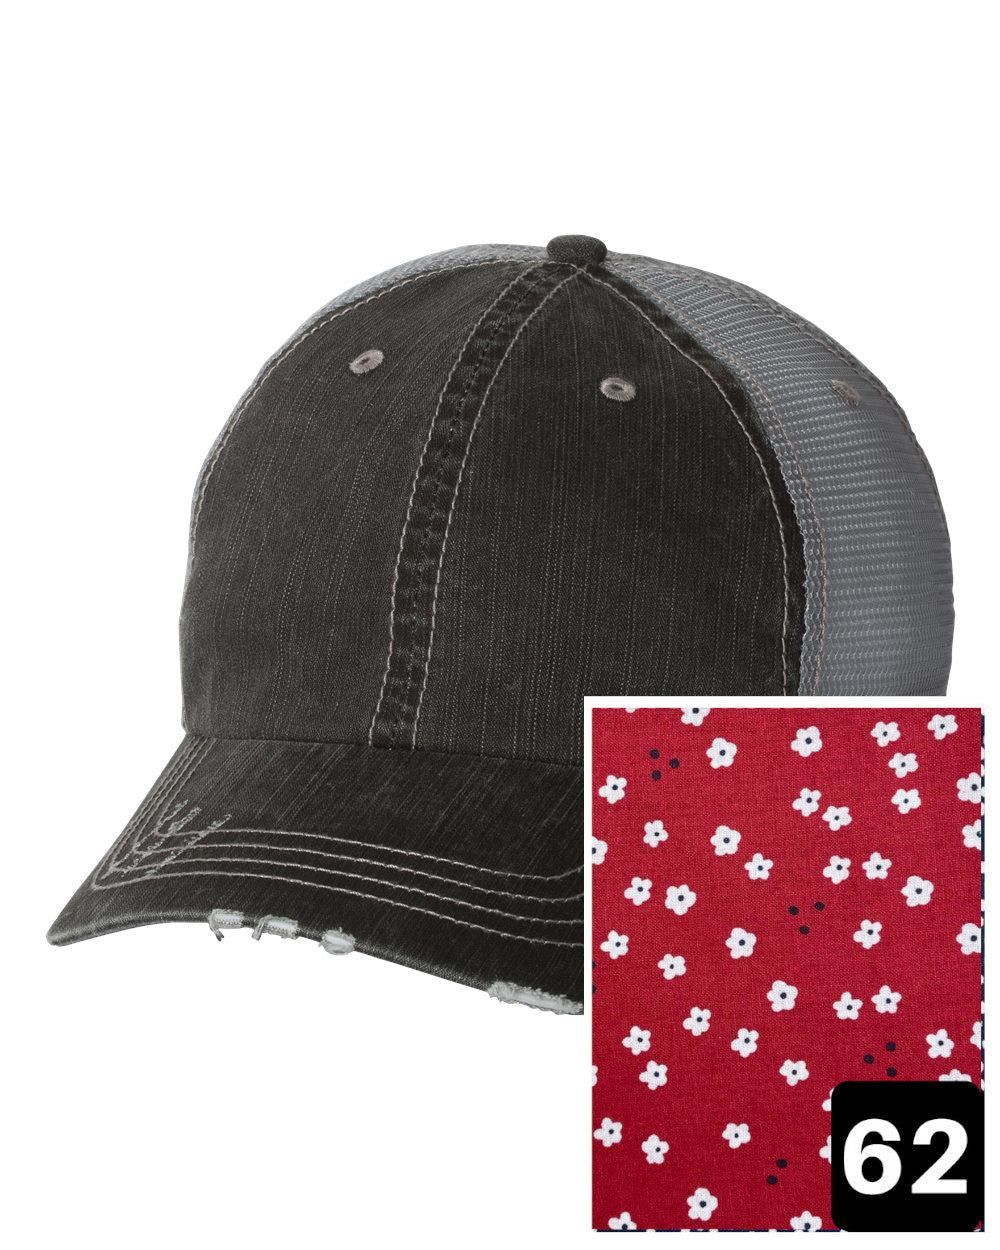 Utah Hat | Gray Distressed Trucker Cap | Many Fabric Choices